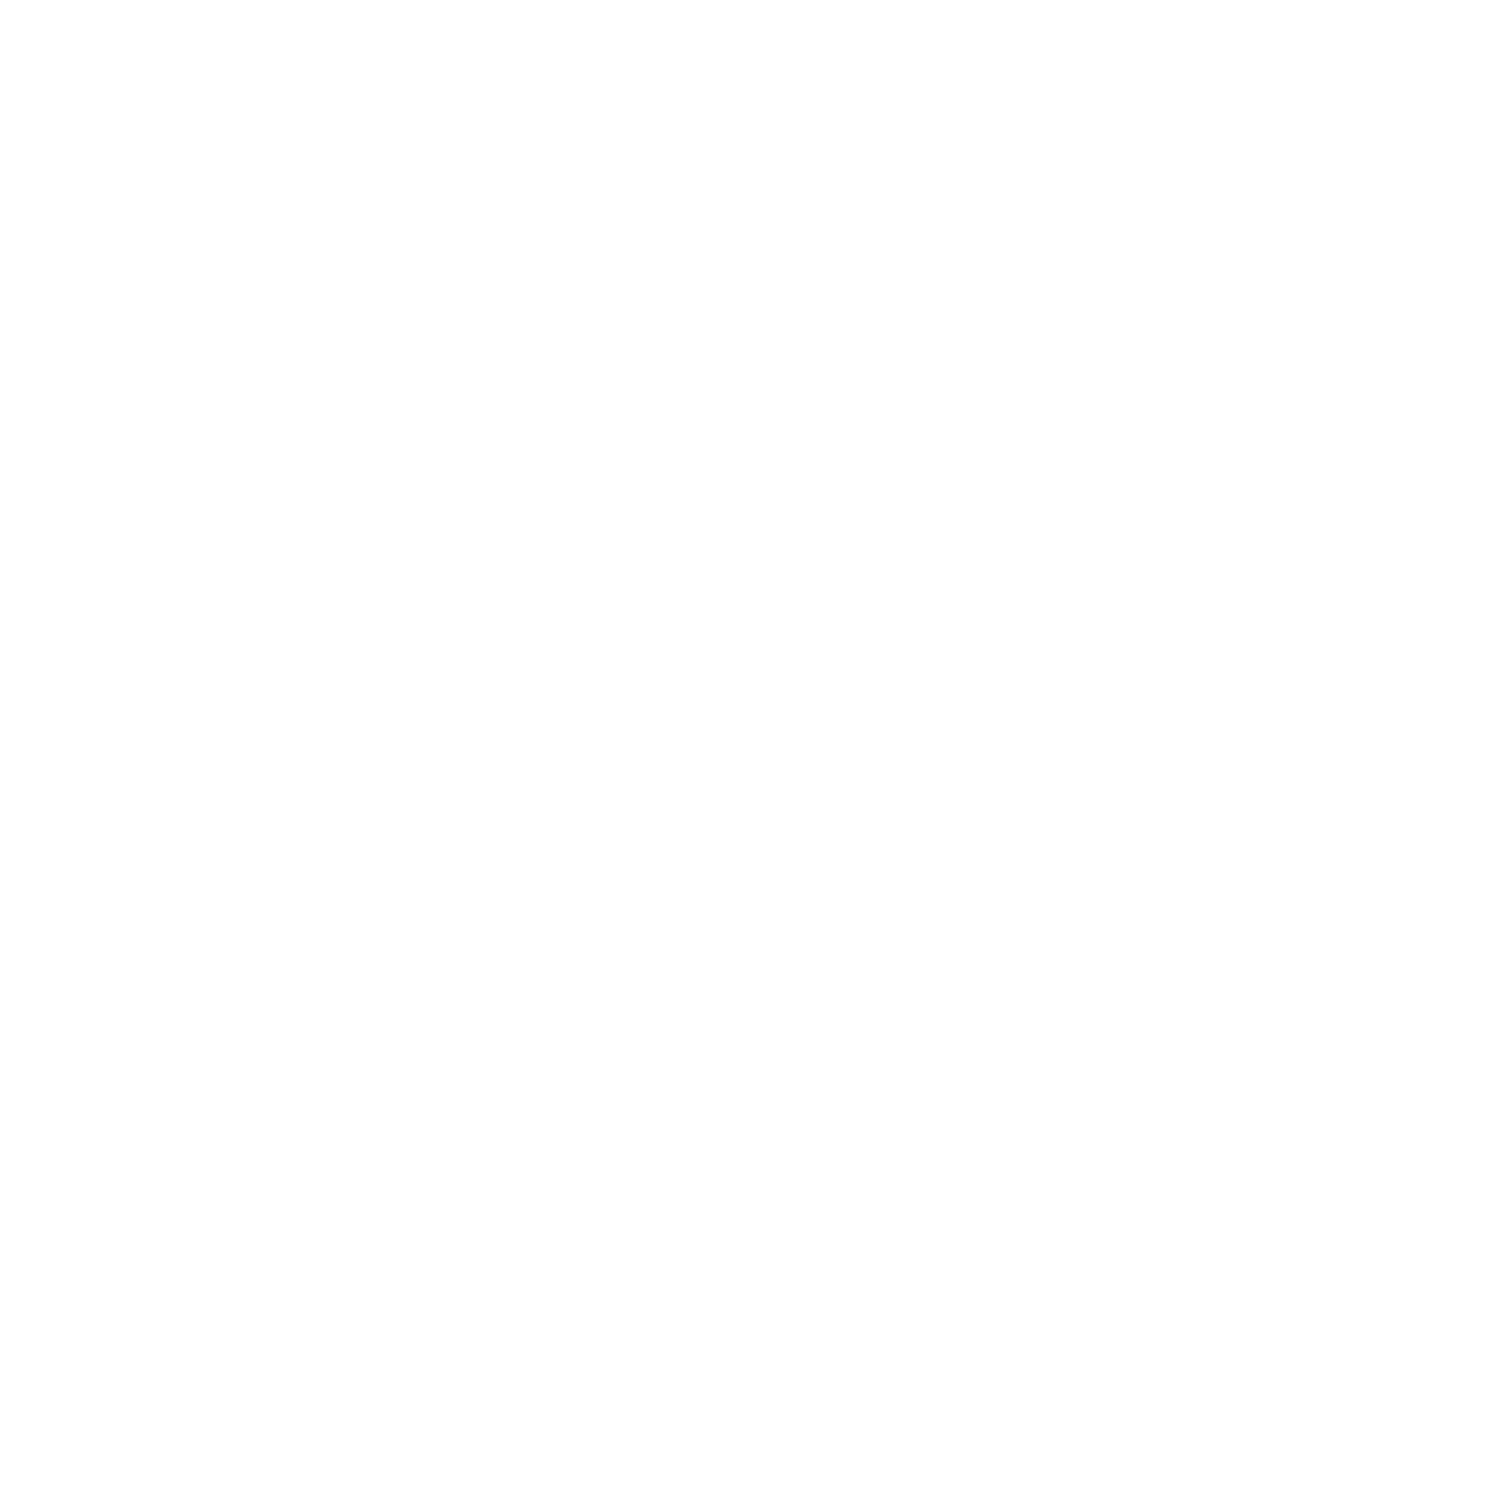 NYC HALLOWEEN FILM FESTIVAL